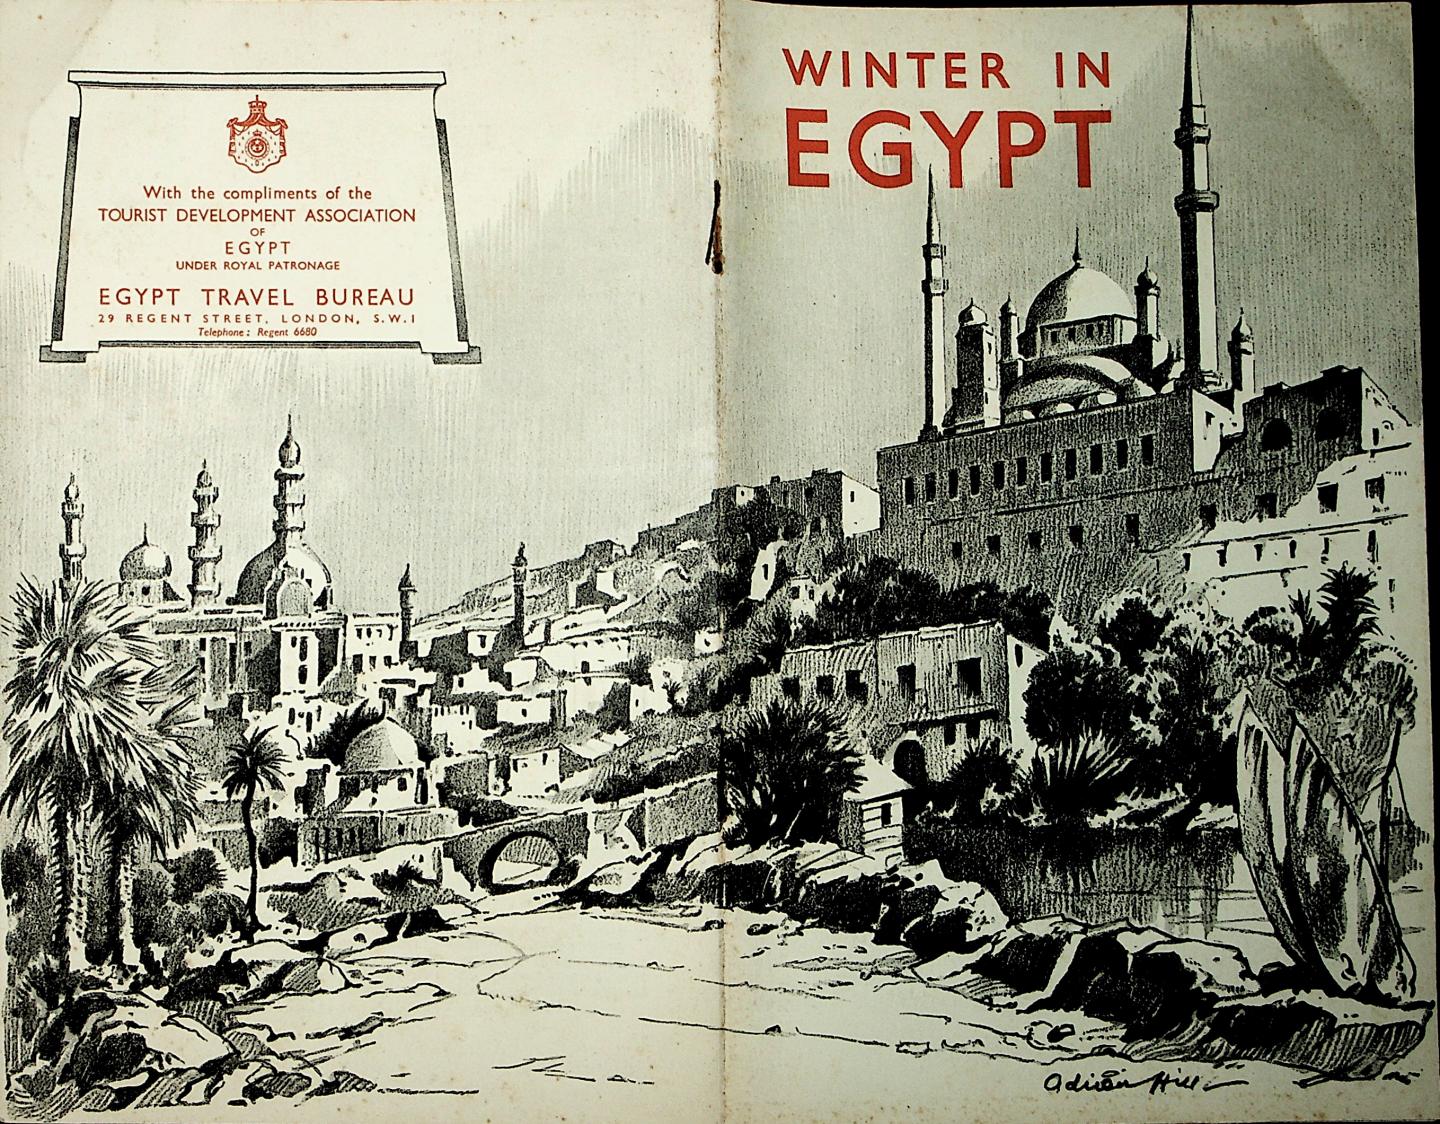 Hille, Adrian - Winter in Egypt